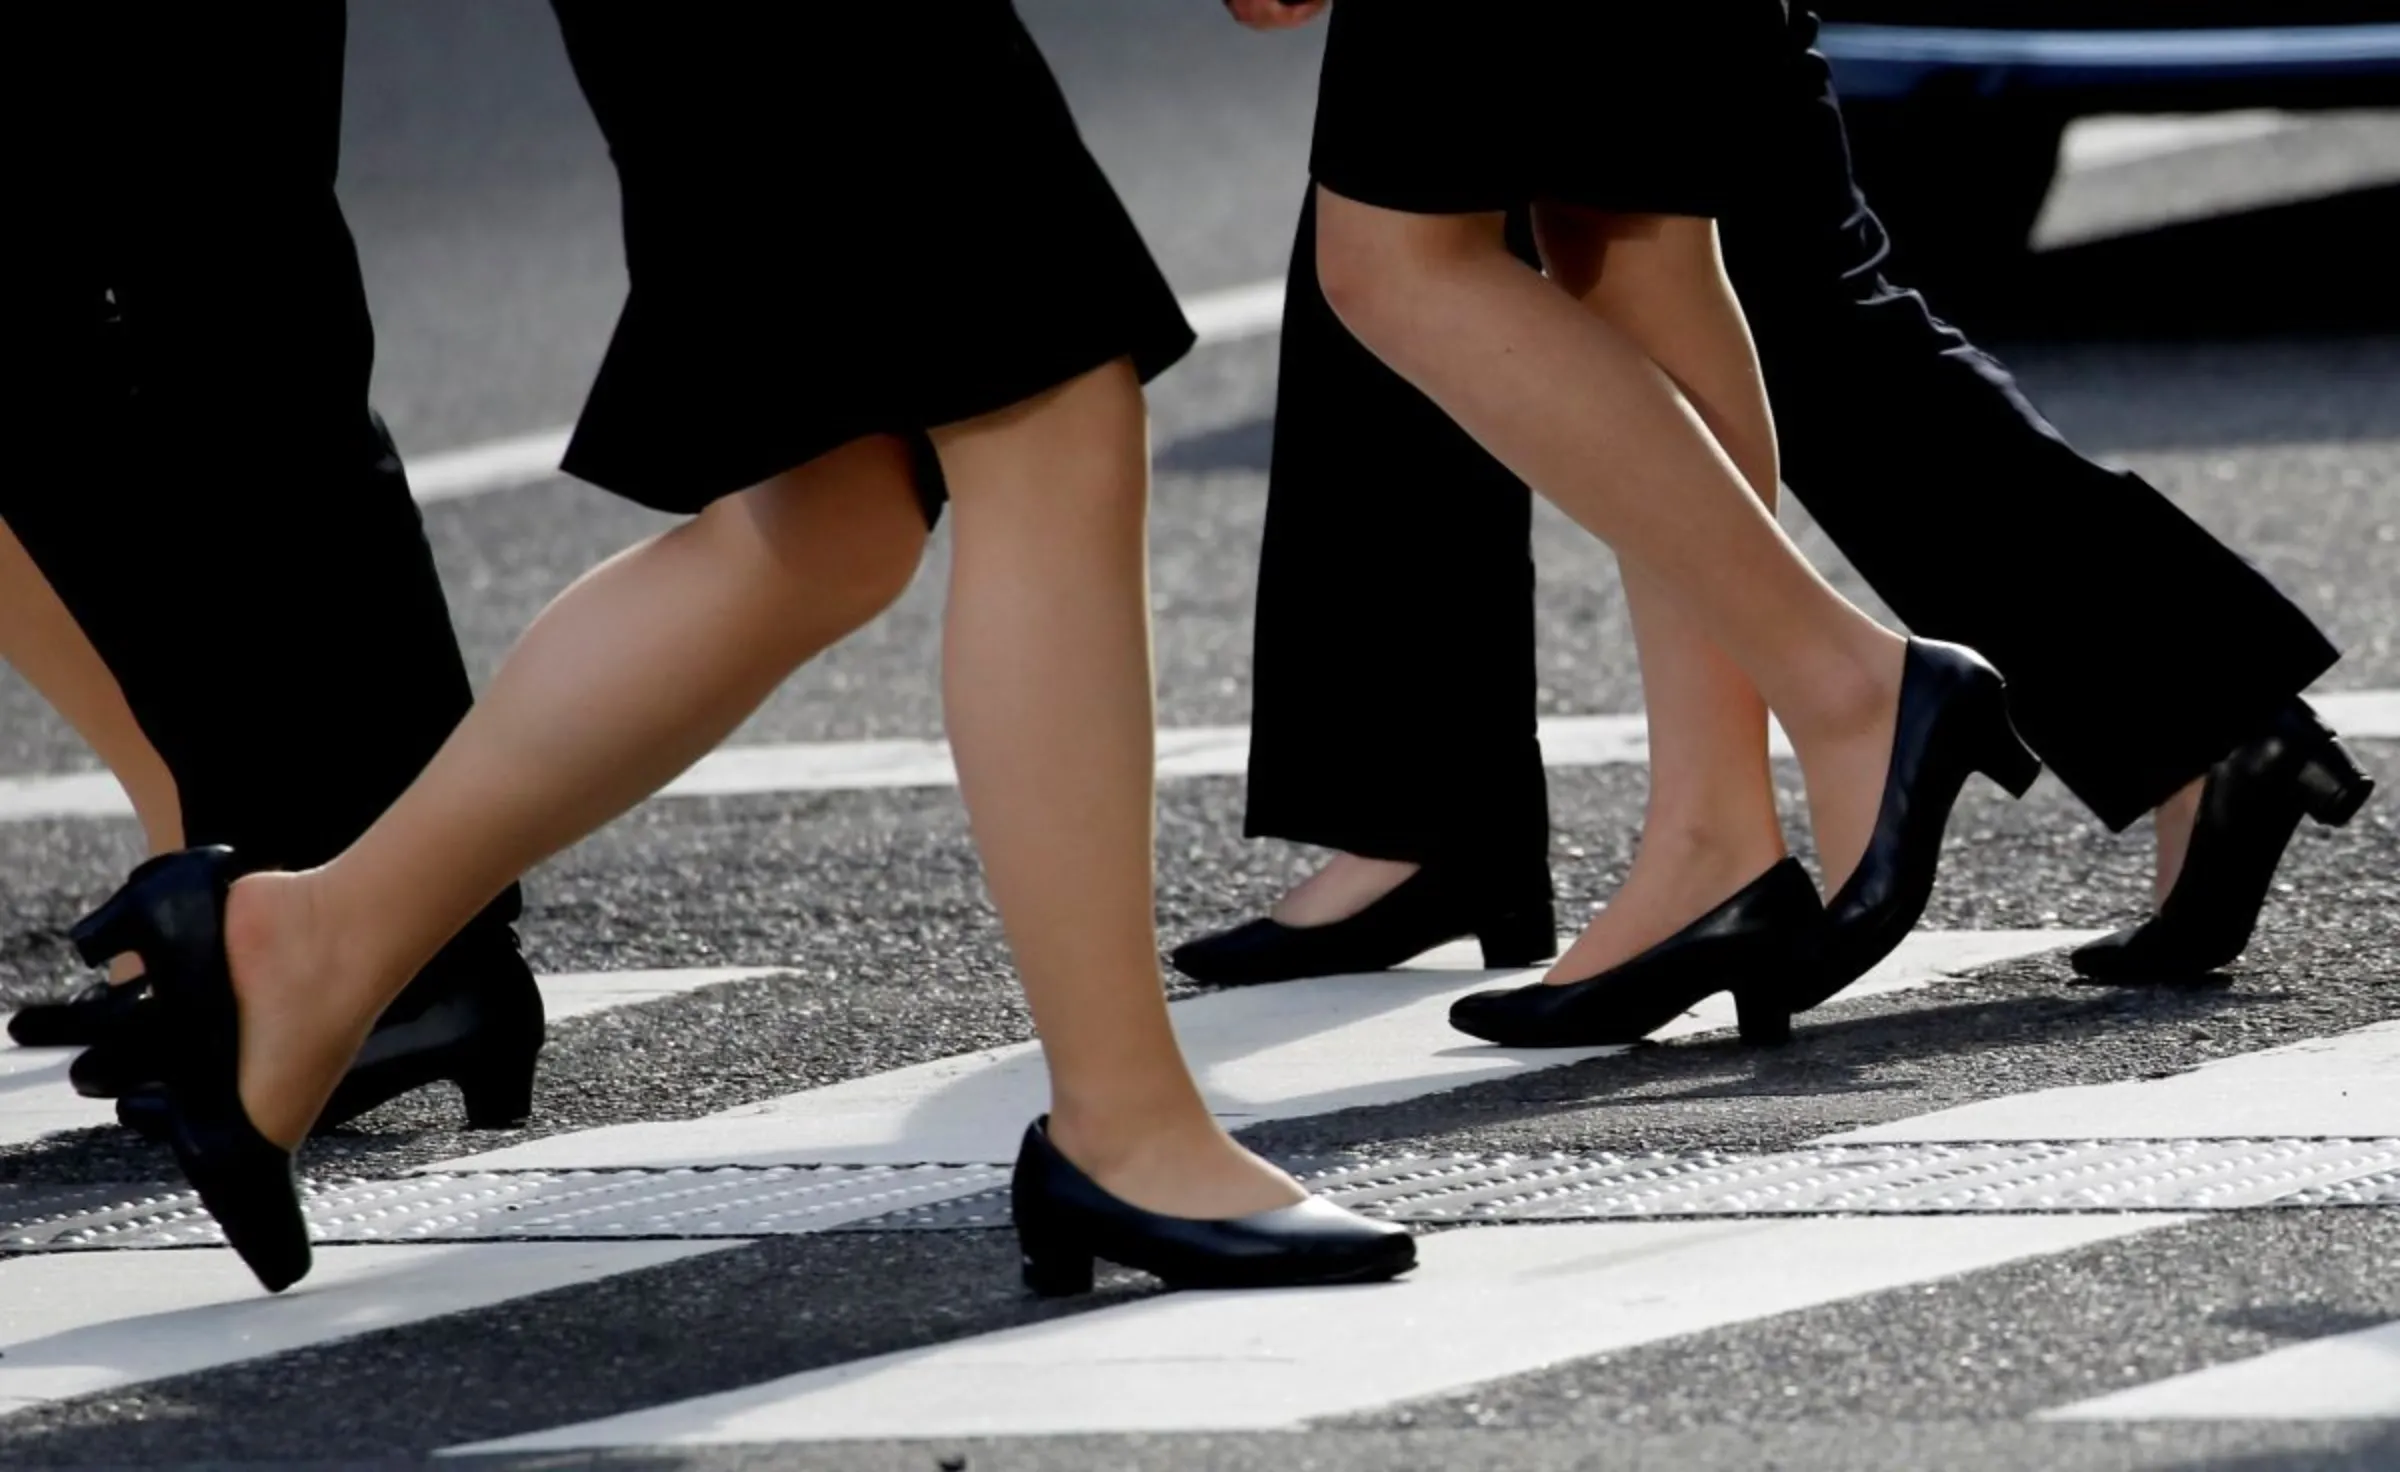 Women in high heels walk at a business district in Tokyo, Japan, June 4, 2019. REUTERS/Kim Kyung-Hoon